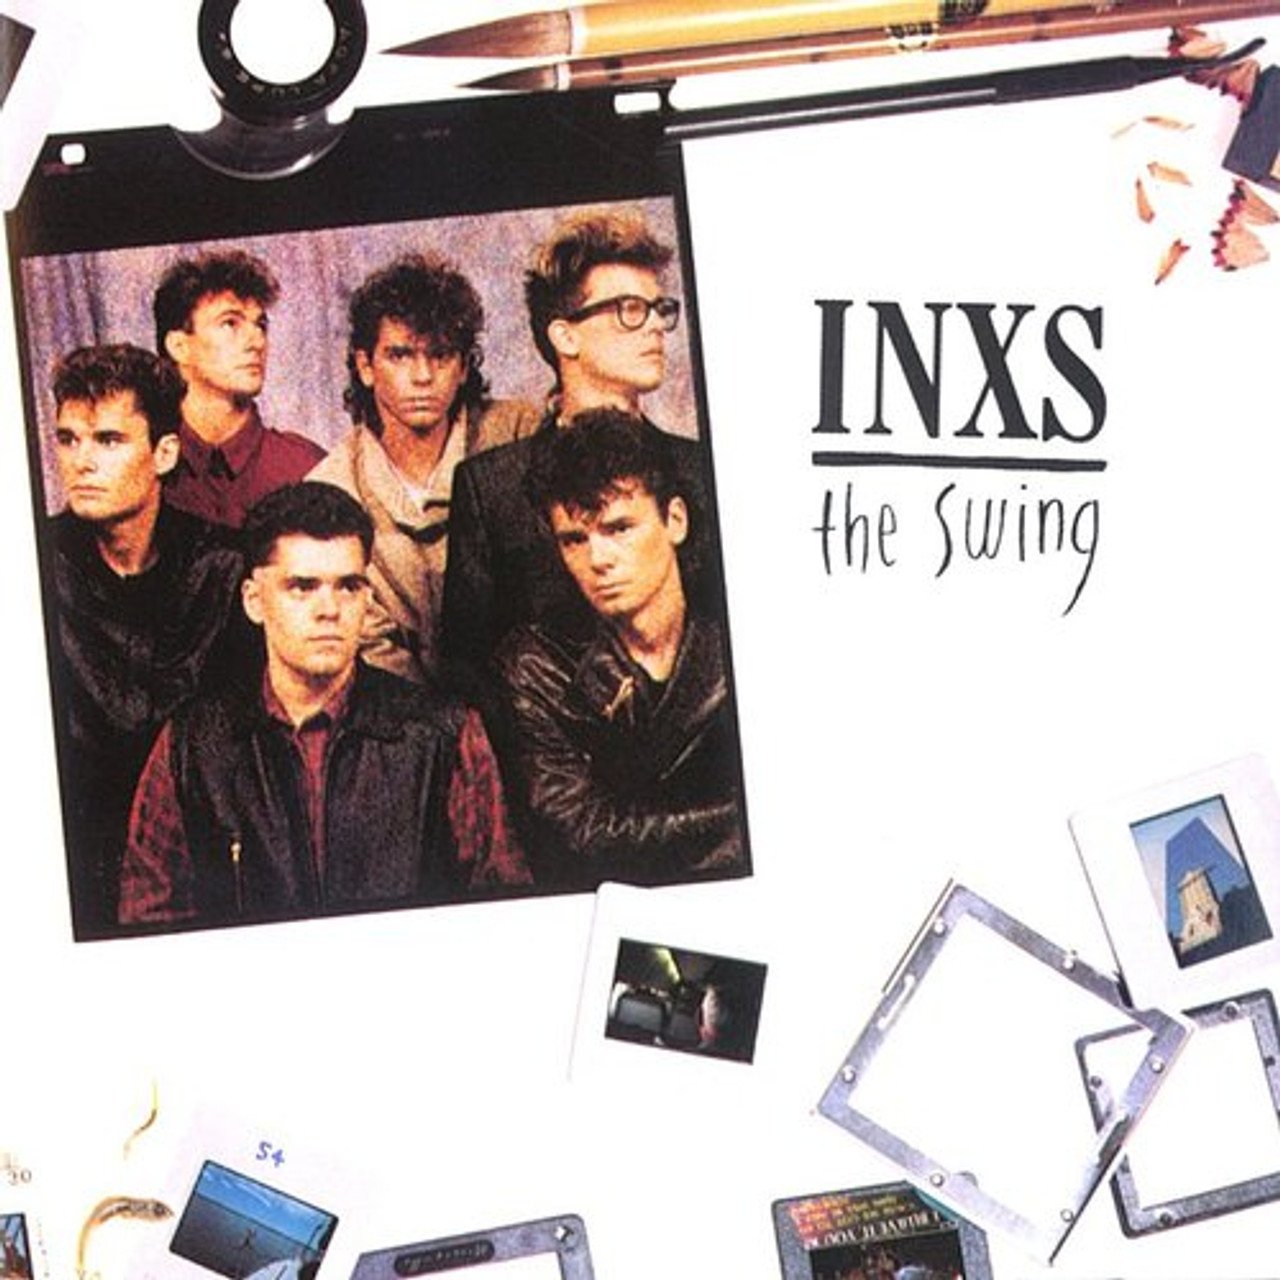 INXS "The Swing" [Rocktober 2022 "Bluejay" Opaque Vinyl]